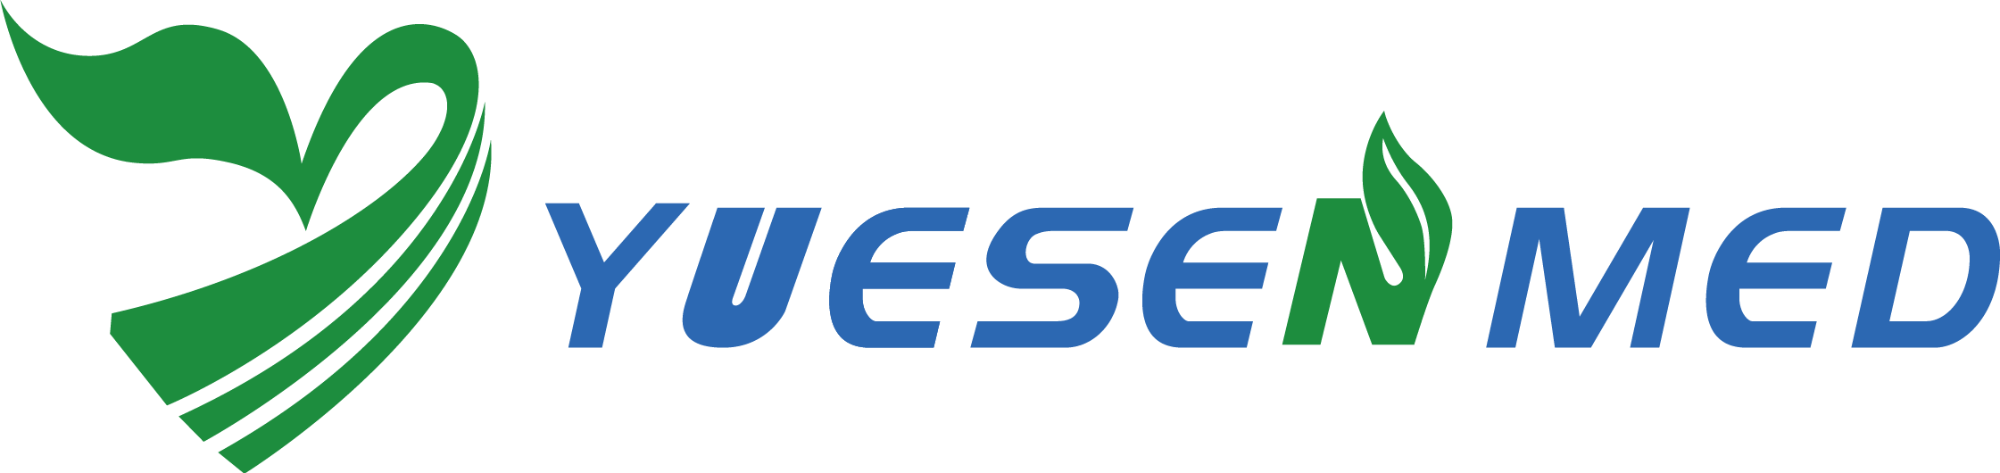 Professional Medical Equipment Supplier - Yuesen Med